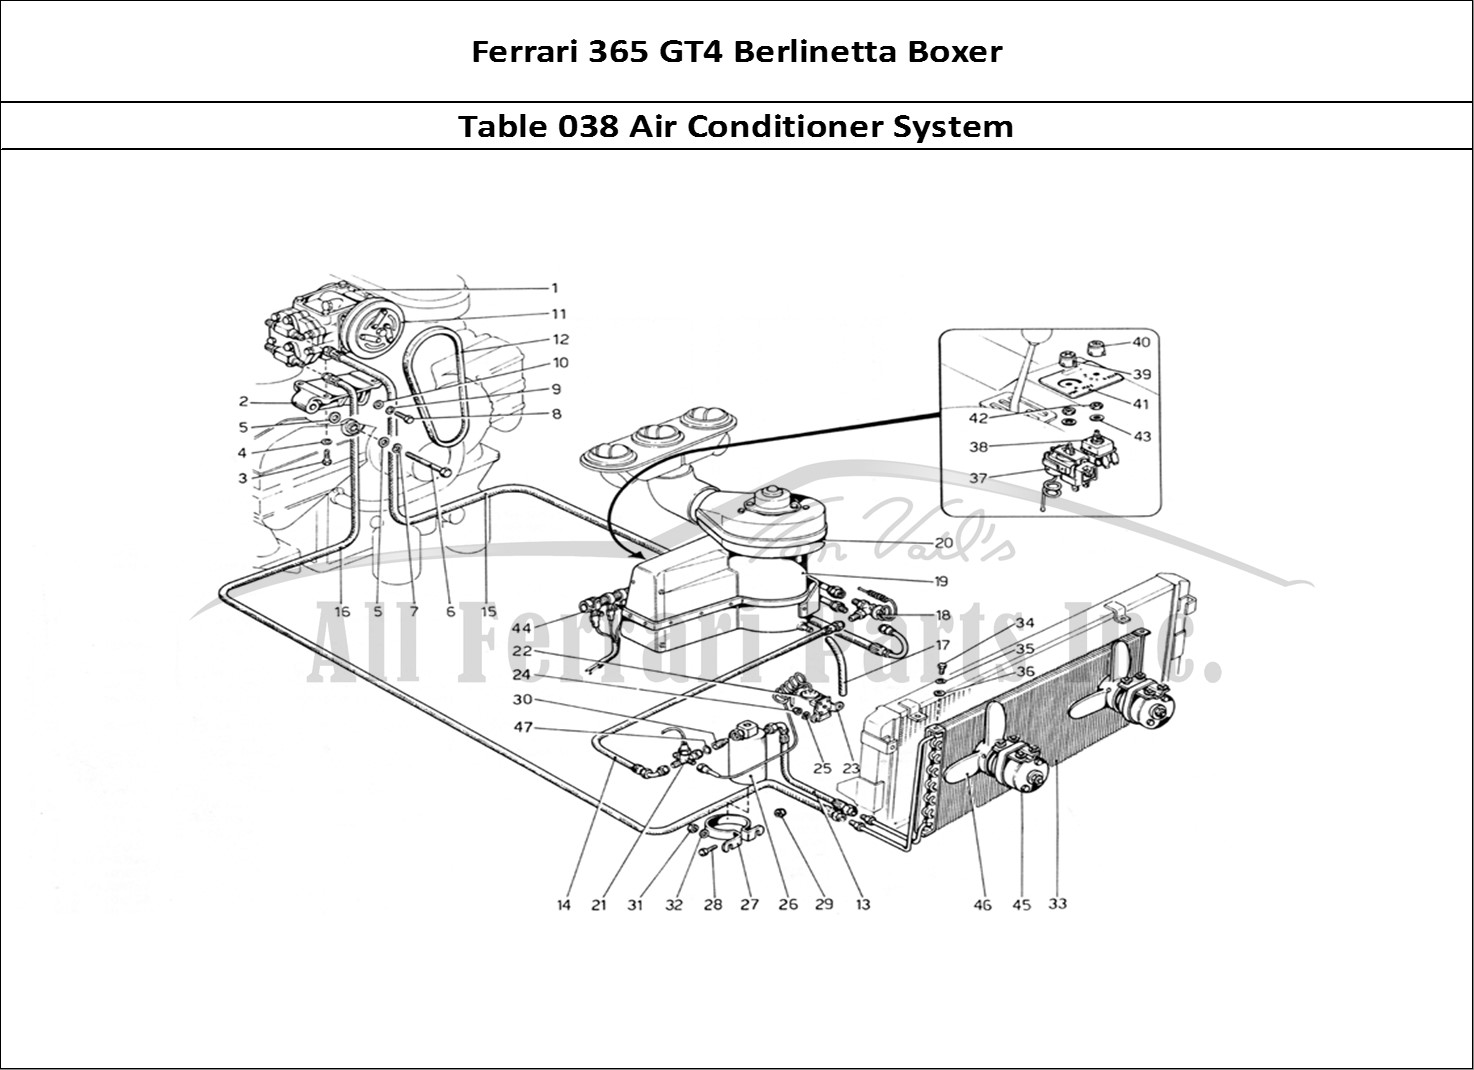 Ferrari Parts Ferrari 365 GT4 Berlinetta Boxer Page 038 Air Conditioning System